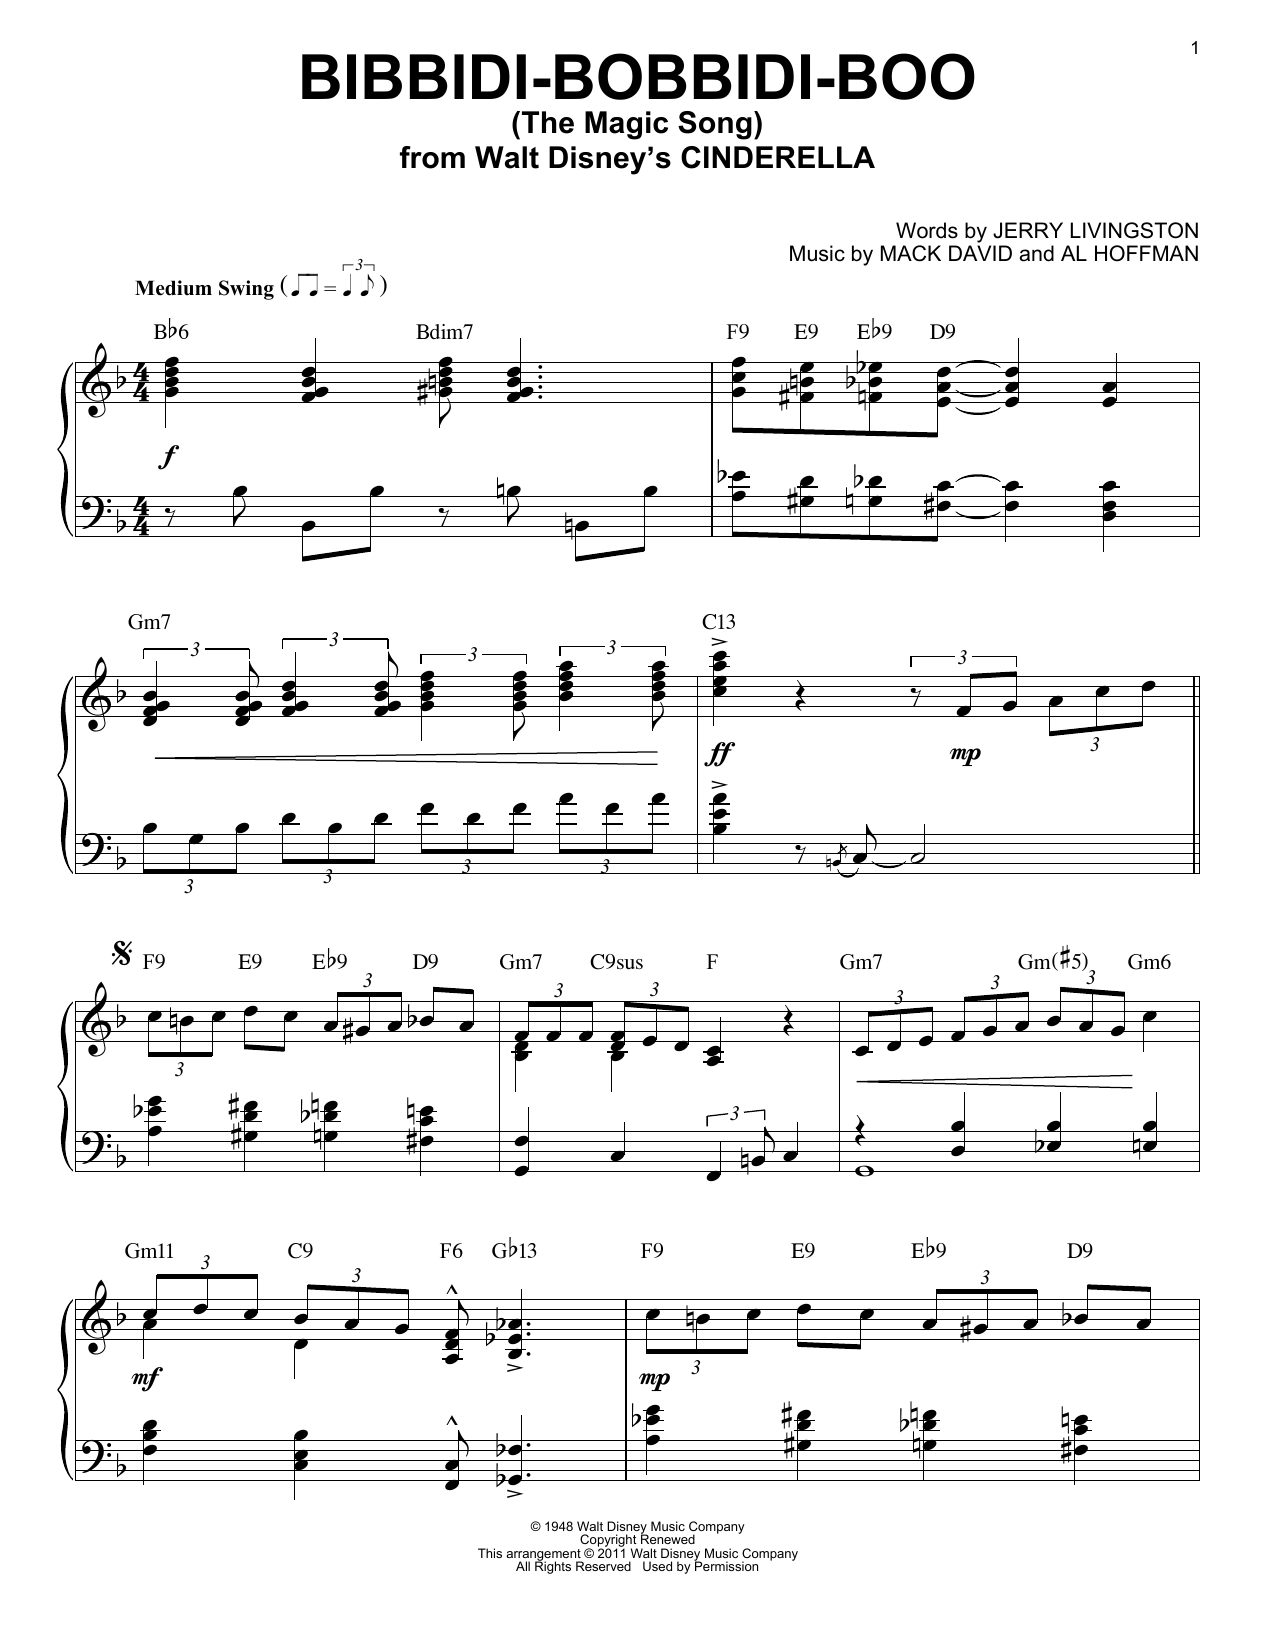 Download Verna Felton Bibbidi-Bobbidi-Boo (The Magic Song) Sheet Music and learn how to play Piano PDF digital score in minutes